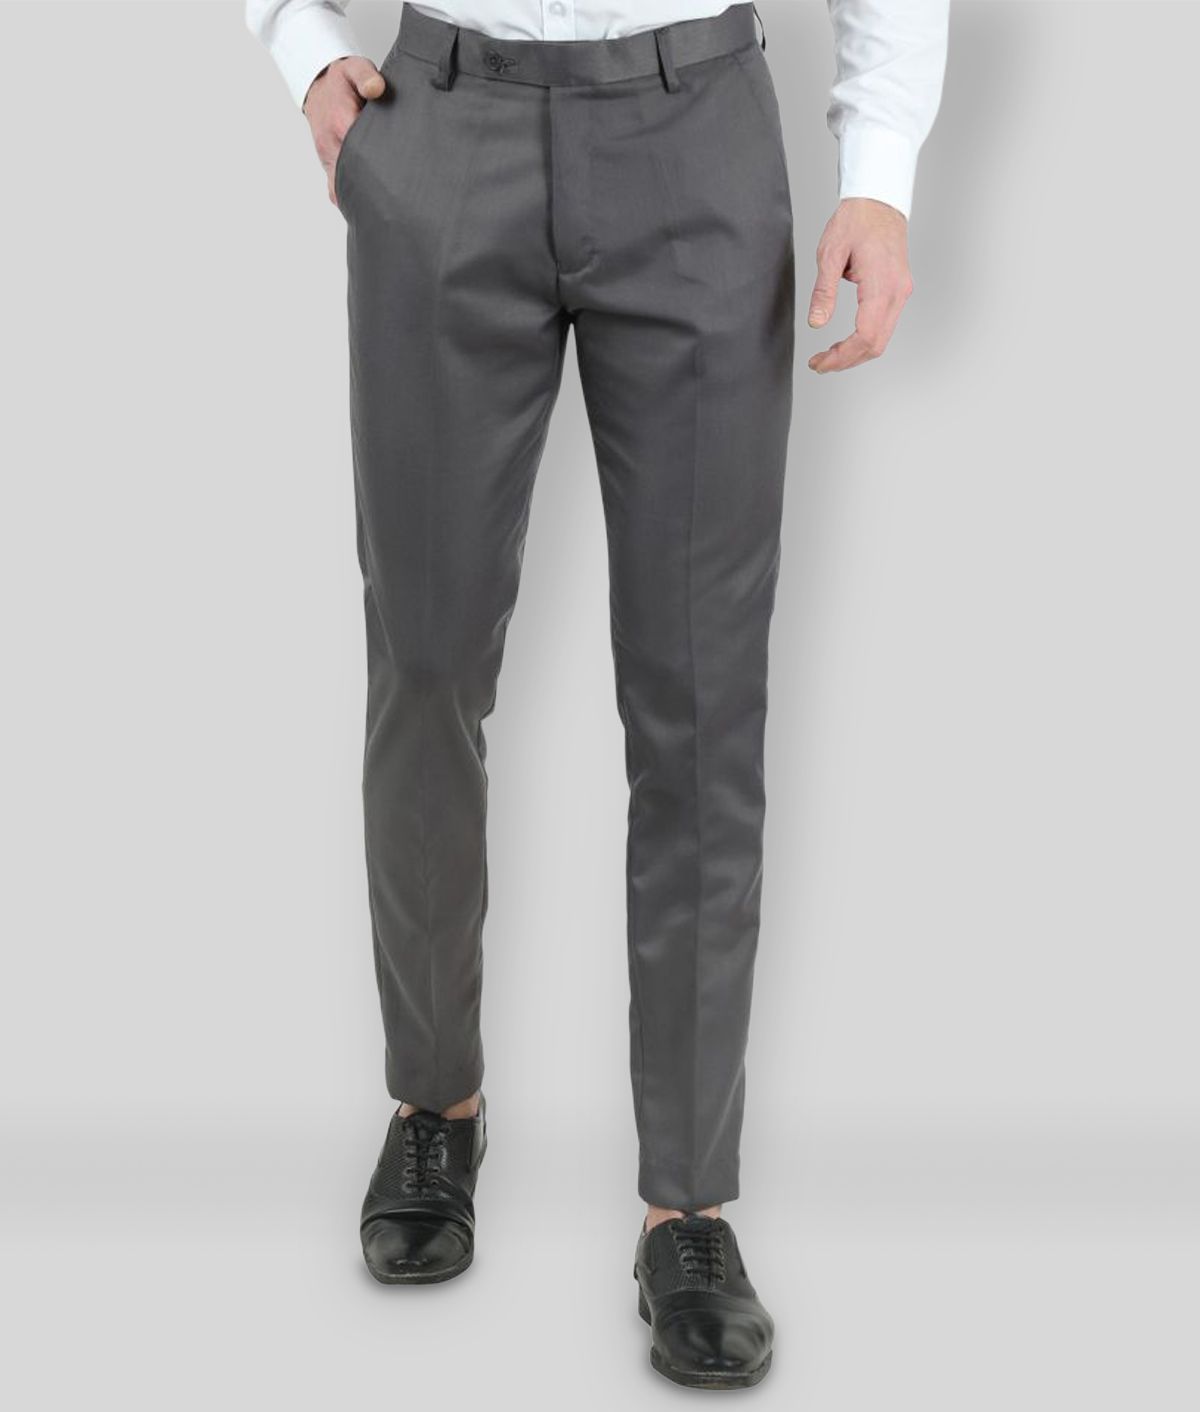     			VEI SASTRE - Grey Cotton Blend Slim Fit Men's Formal Pants (Pack of 1)